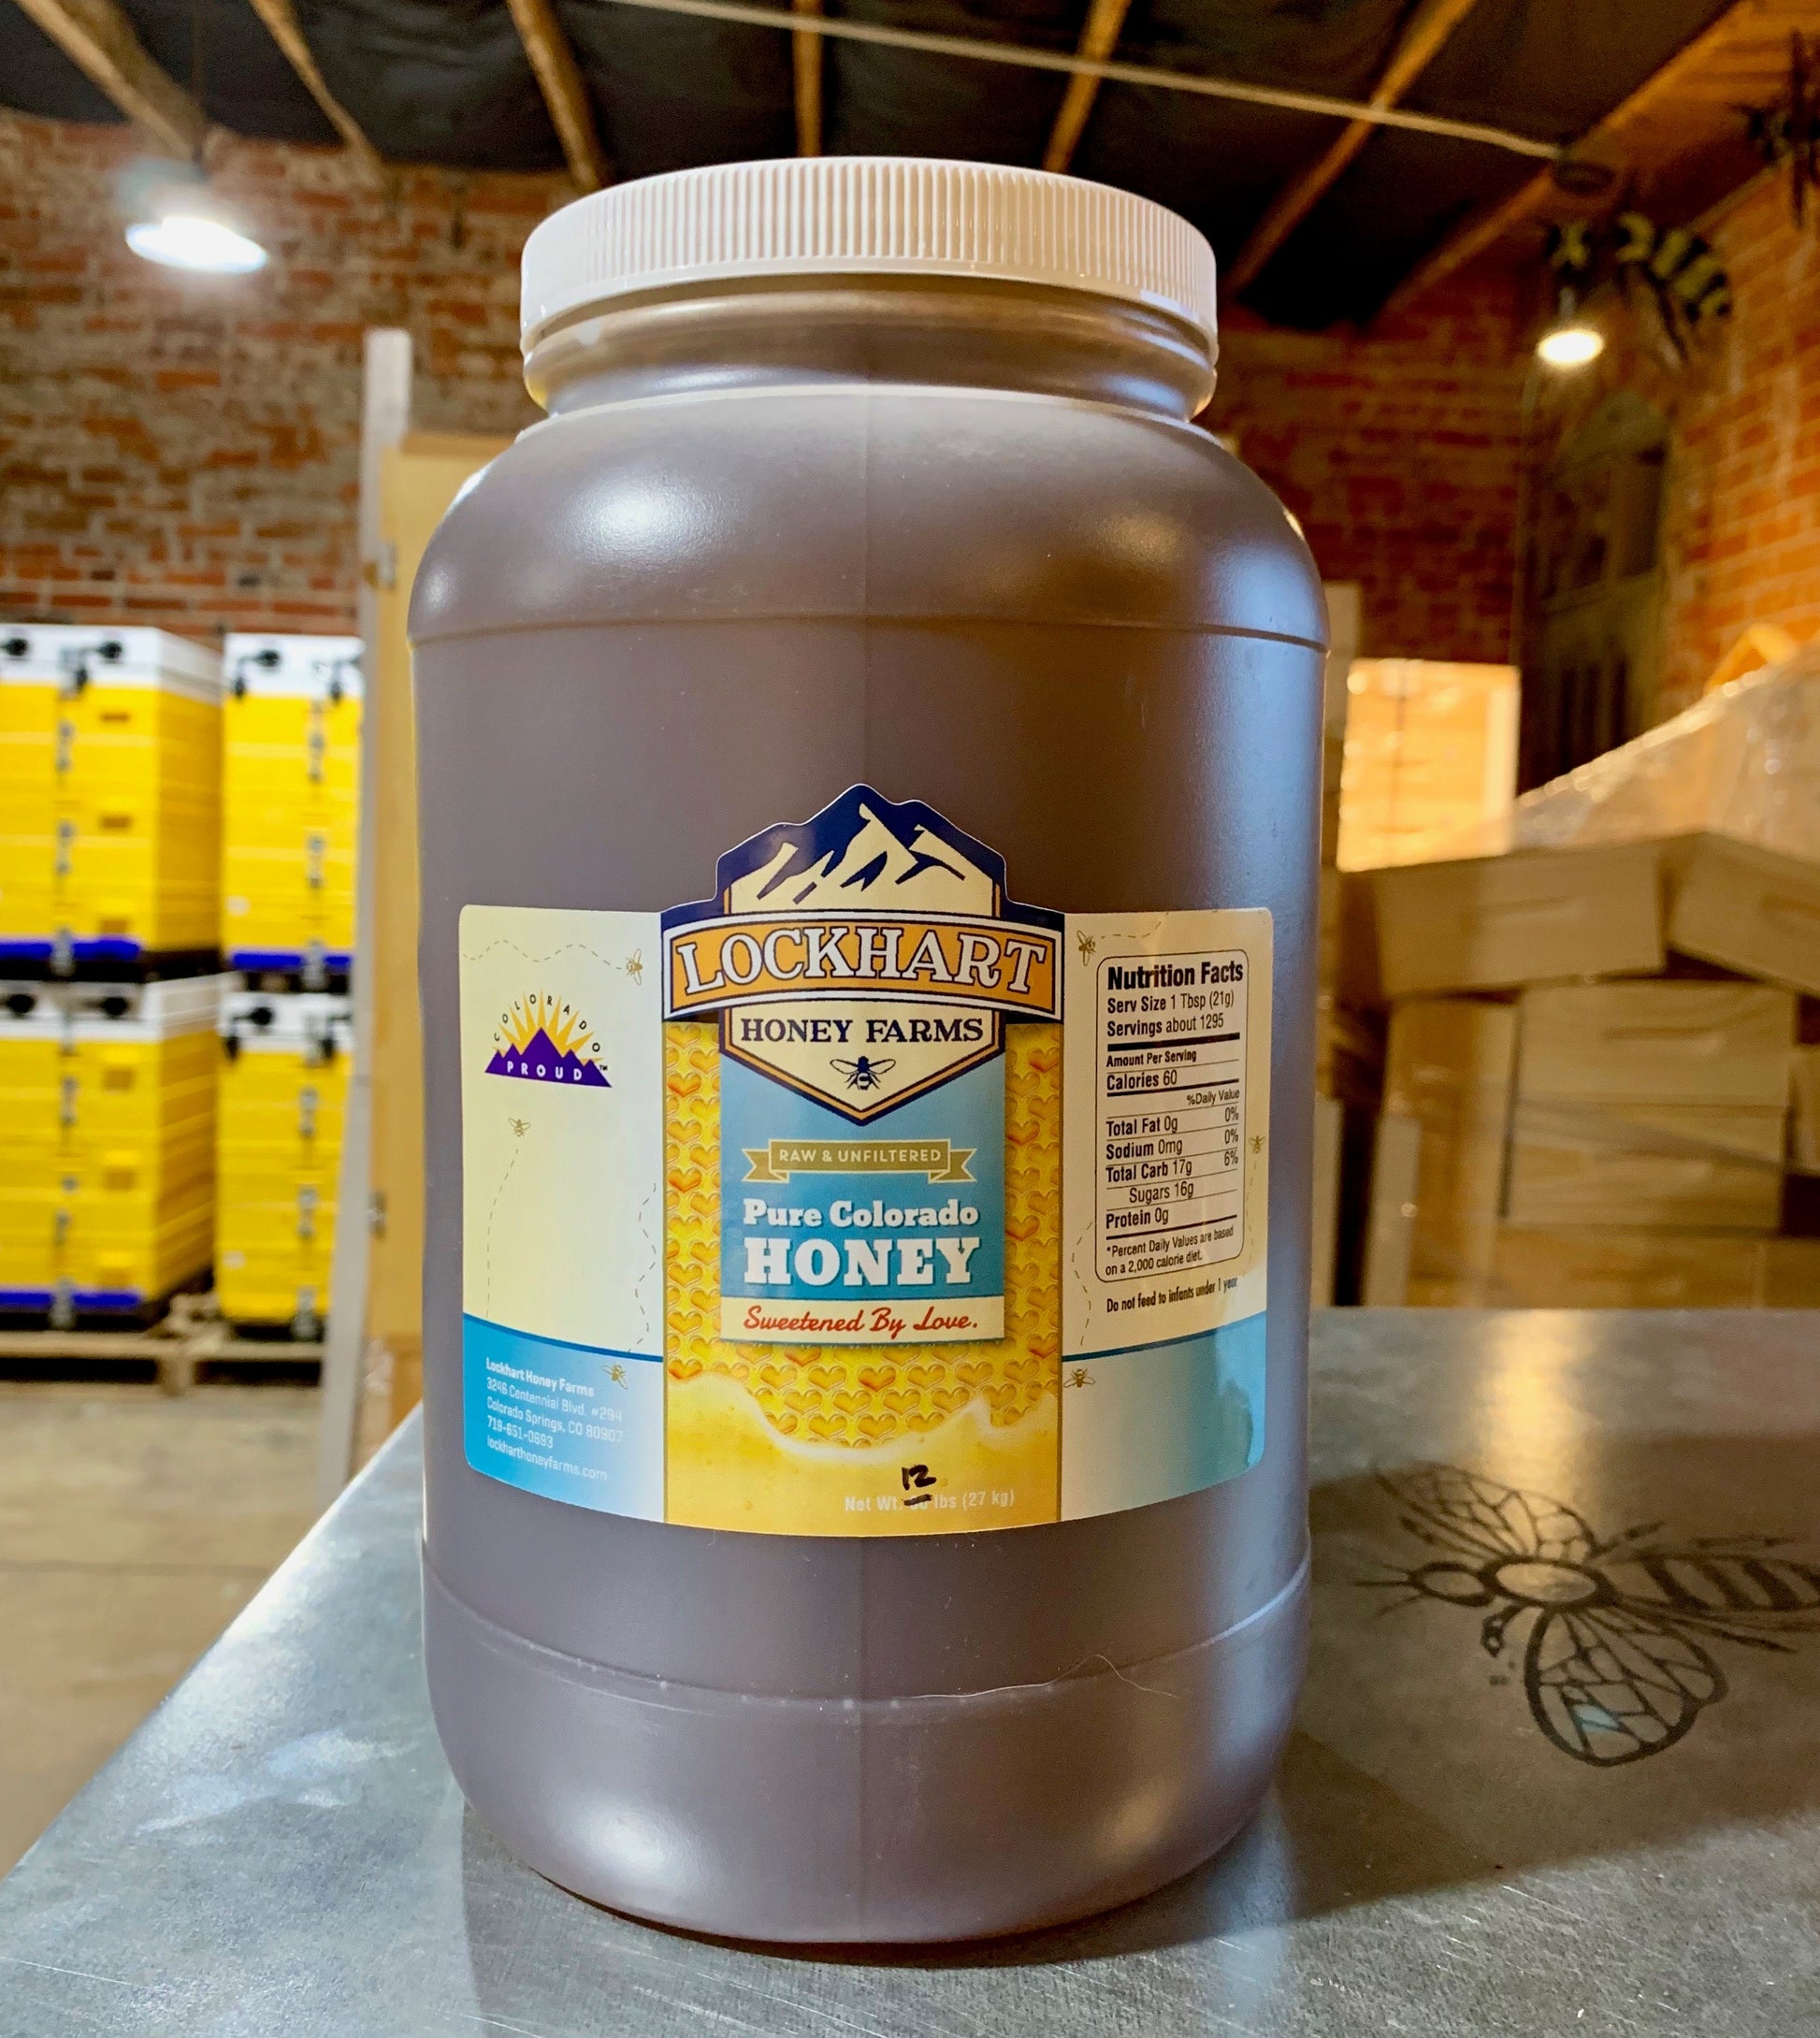 1 gallon honey jug from Lockhart Honey Farms